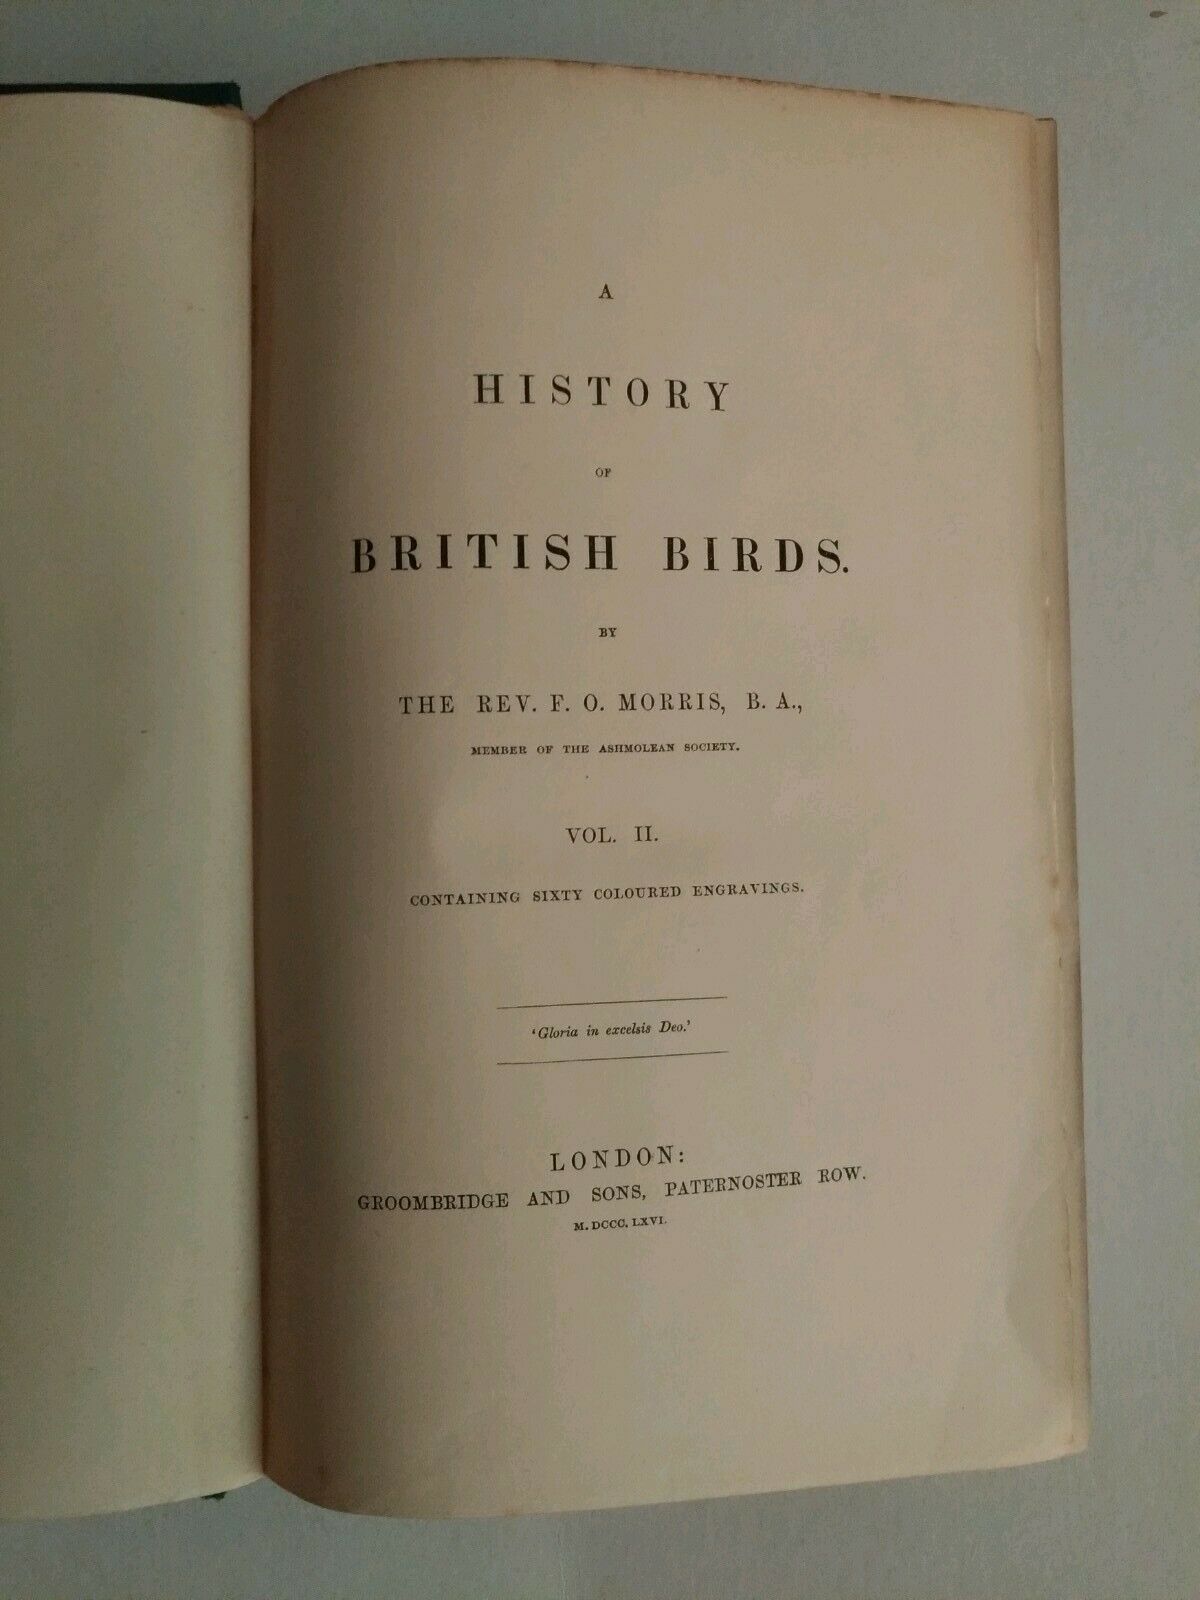 Rev F. O. Morris 1864-66 "A History of British Birds" 6 Volume Set